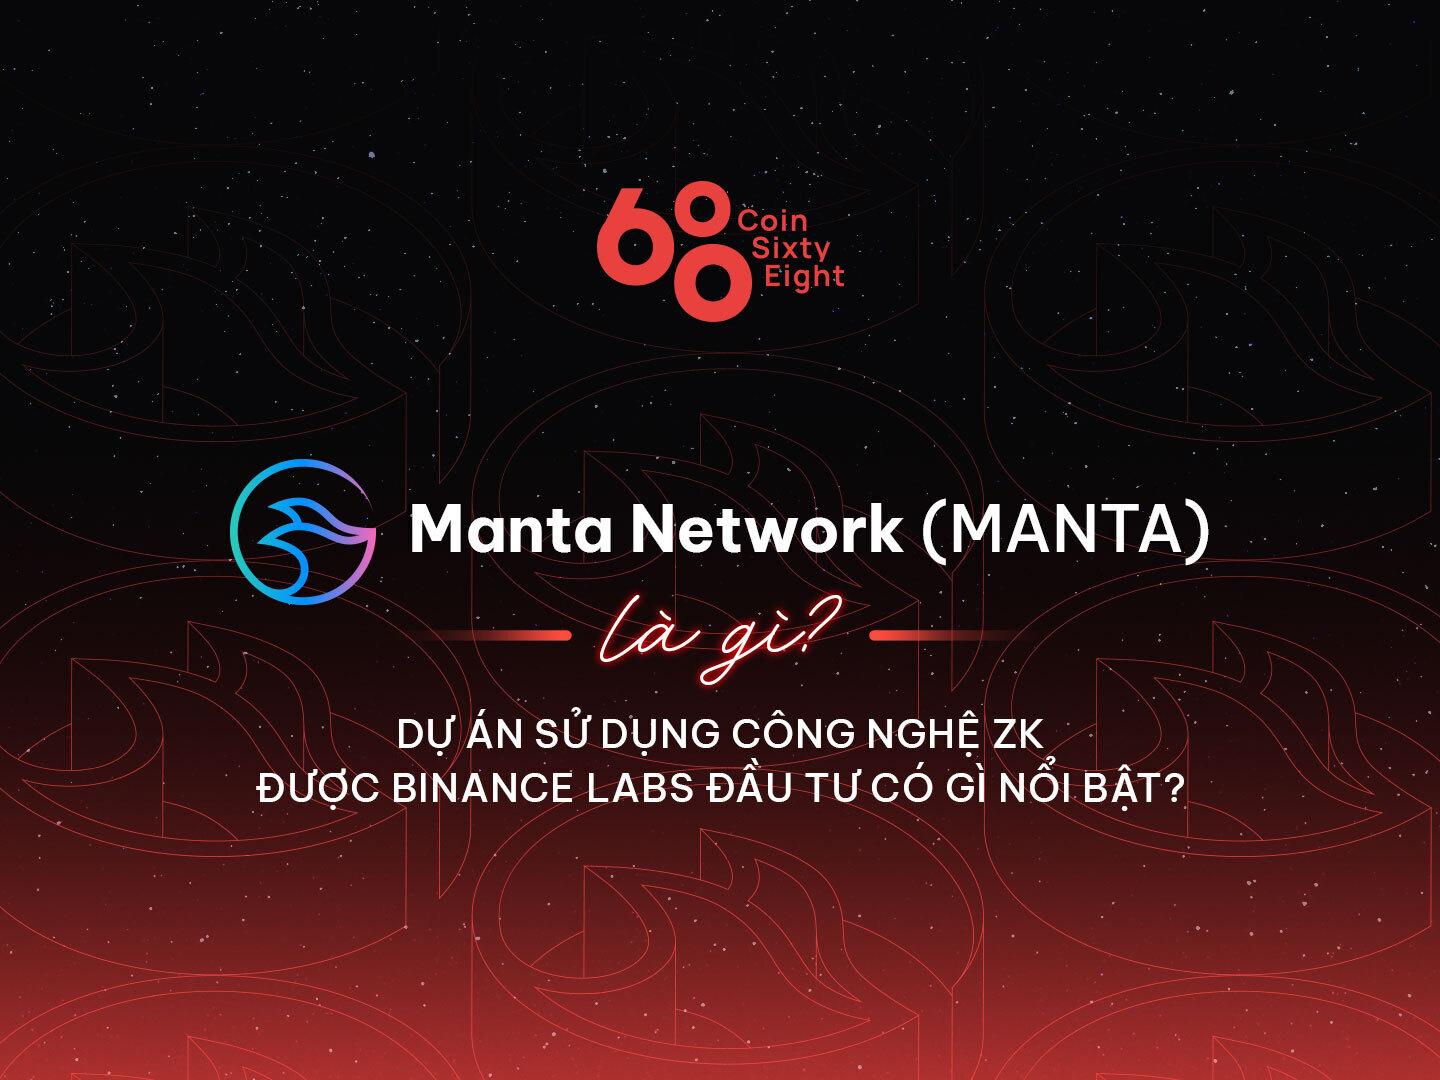 manta-network-manta-du-an-zk-duoc-binance-labs-dau-tu-co-gi-noi-bat